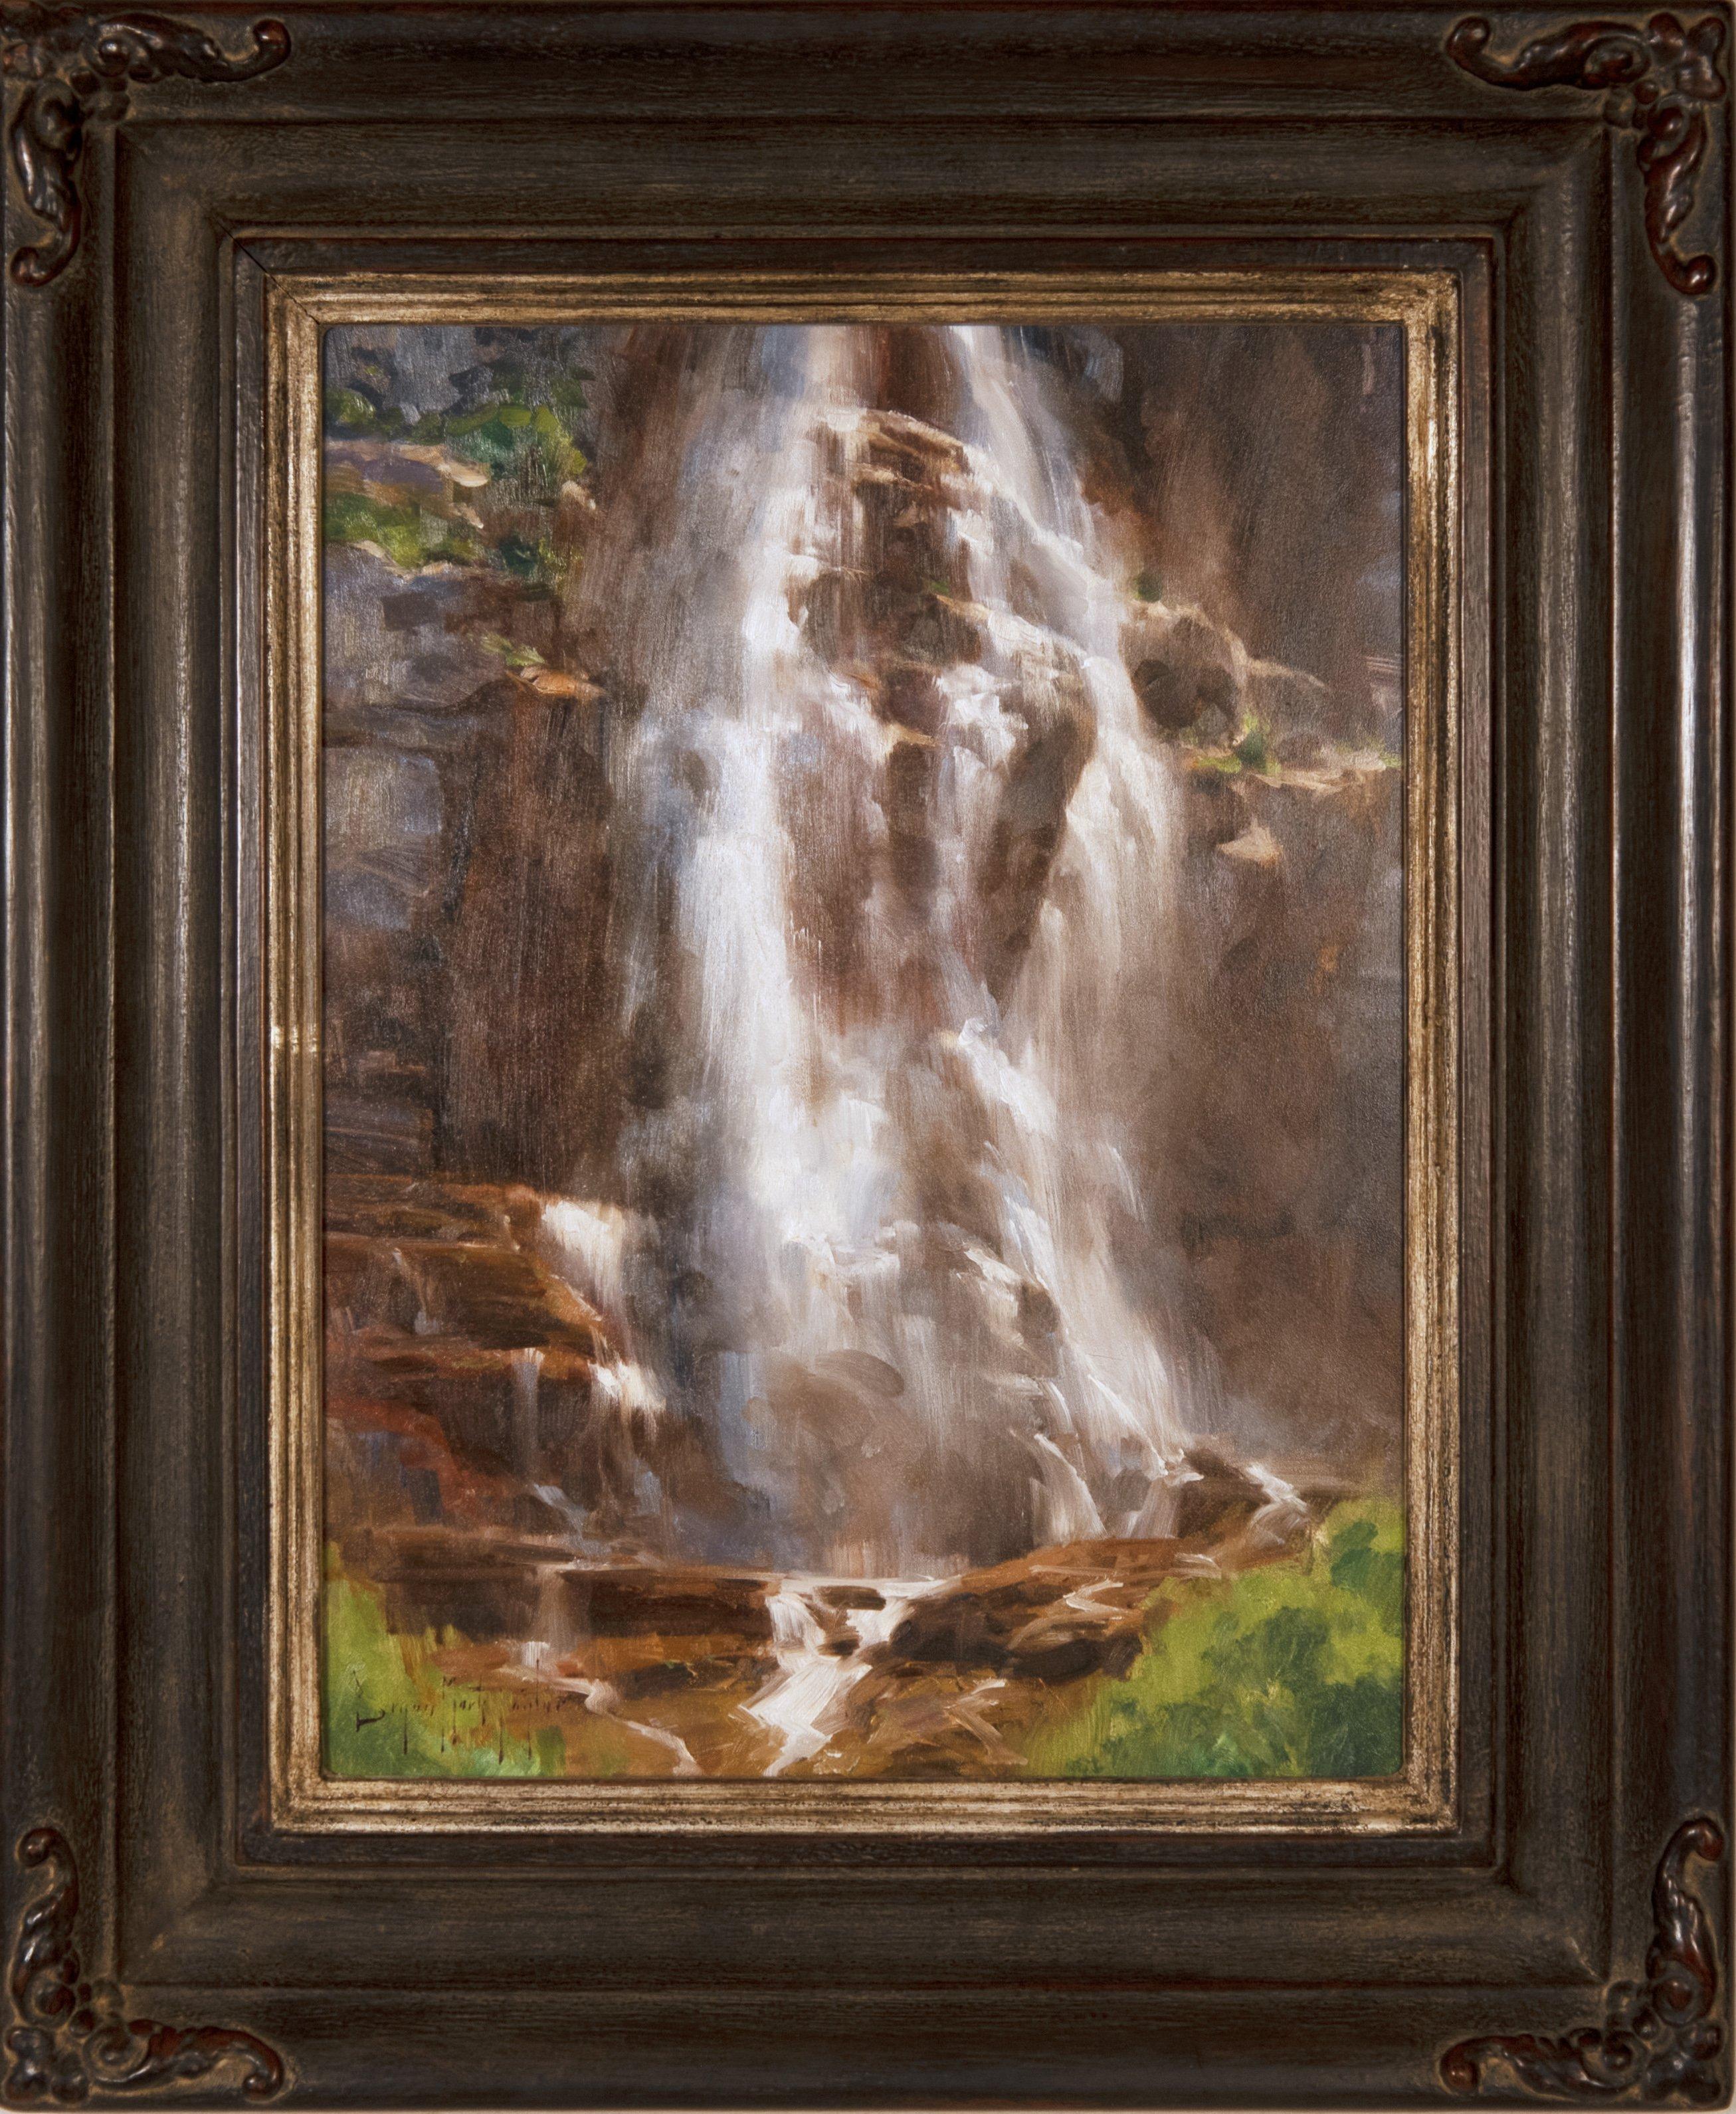 Bryan Mark Taylor Landscape Painting - "Bridal Veil Falls" by Bryan mark Taylor